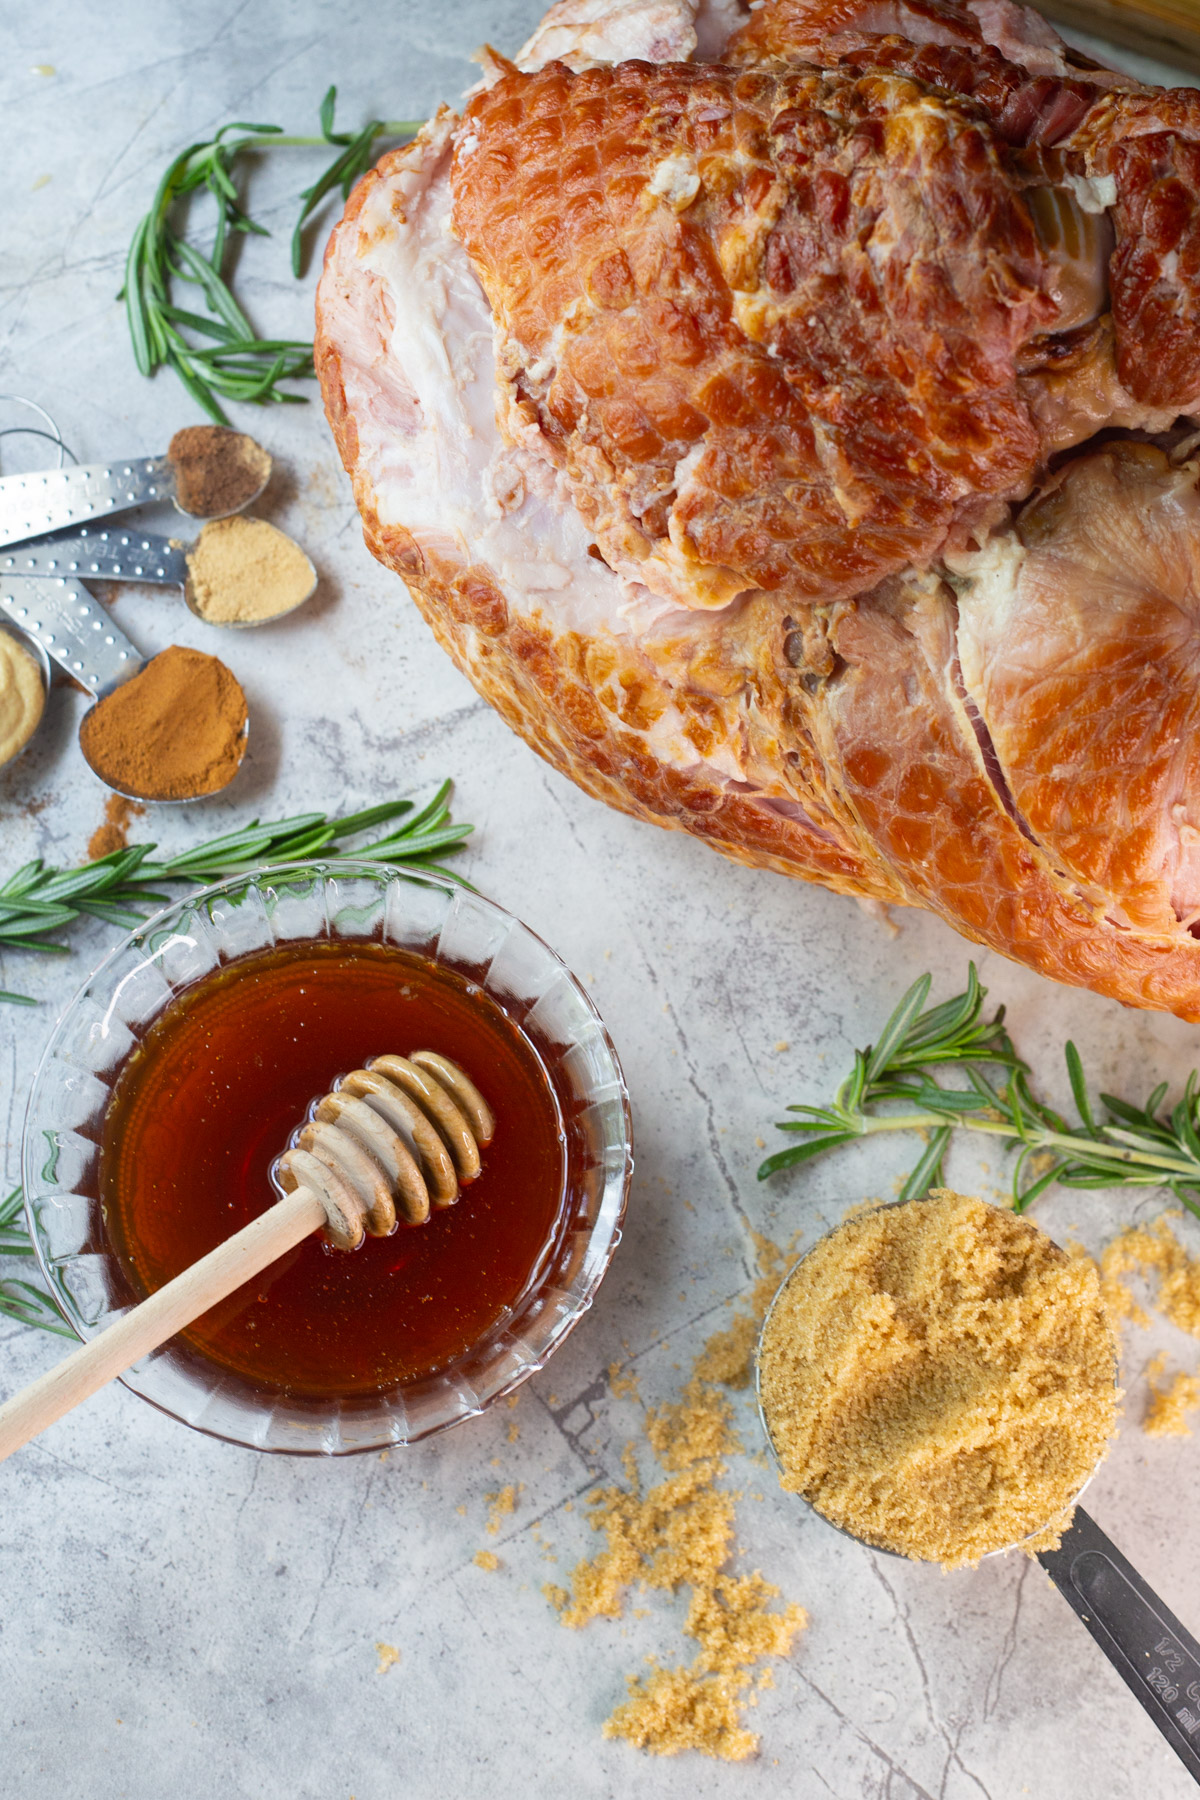 Ingredients for a honey glazed ham: spiral ham, warm honey, brown sugar, cinnamon, and spices. 